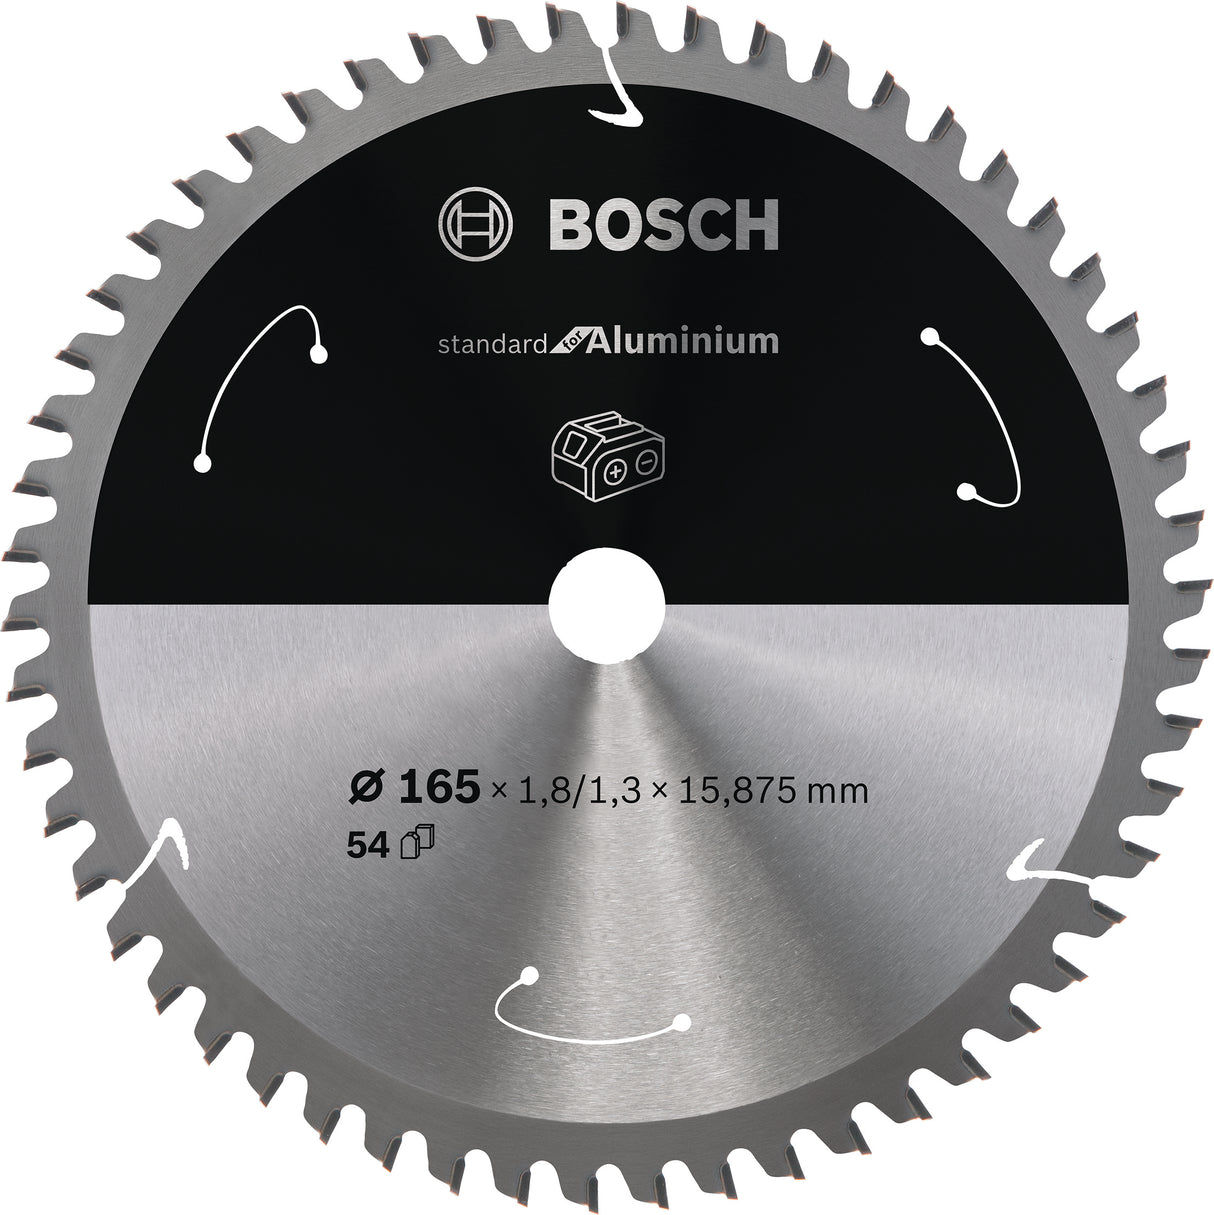 Bosch Professional Aluminium Circular Saw Blade for Cordless Saws - 165x1.8/1.3x15.875 T54 - Standard